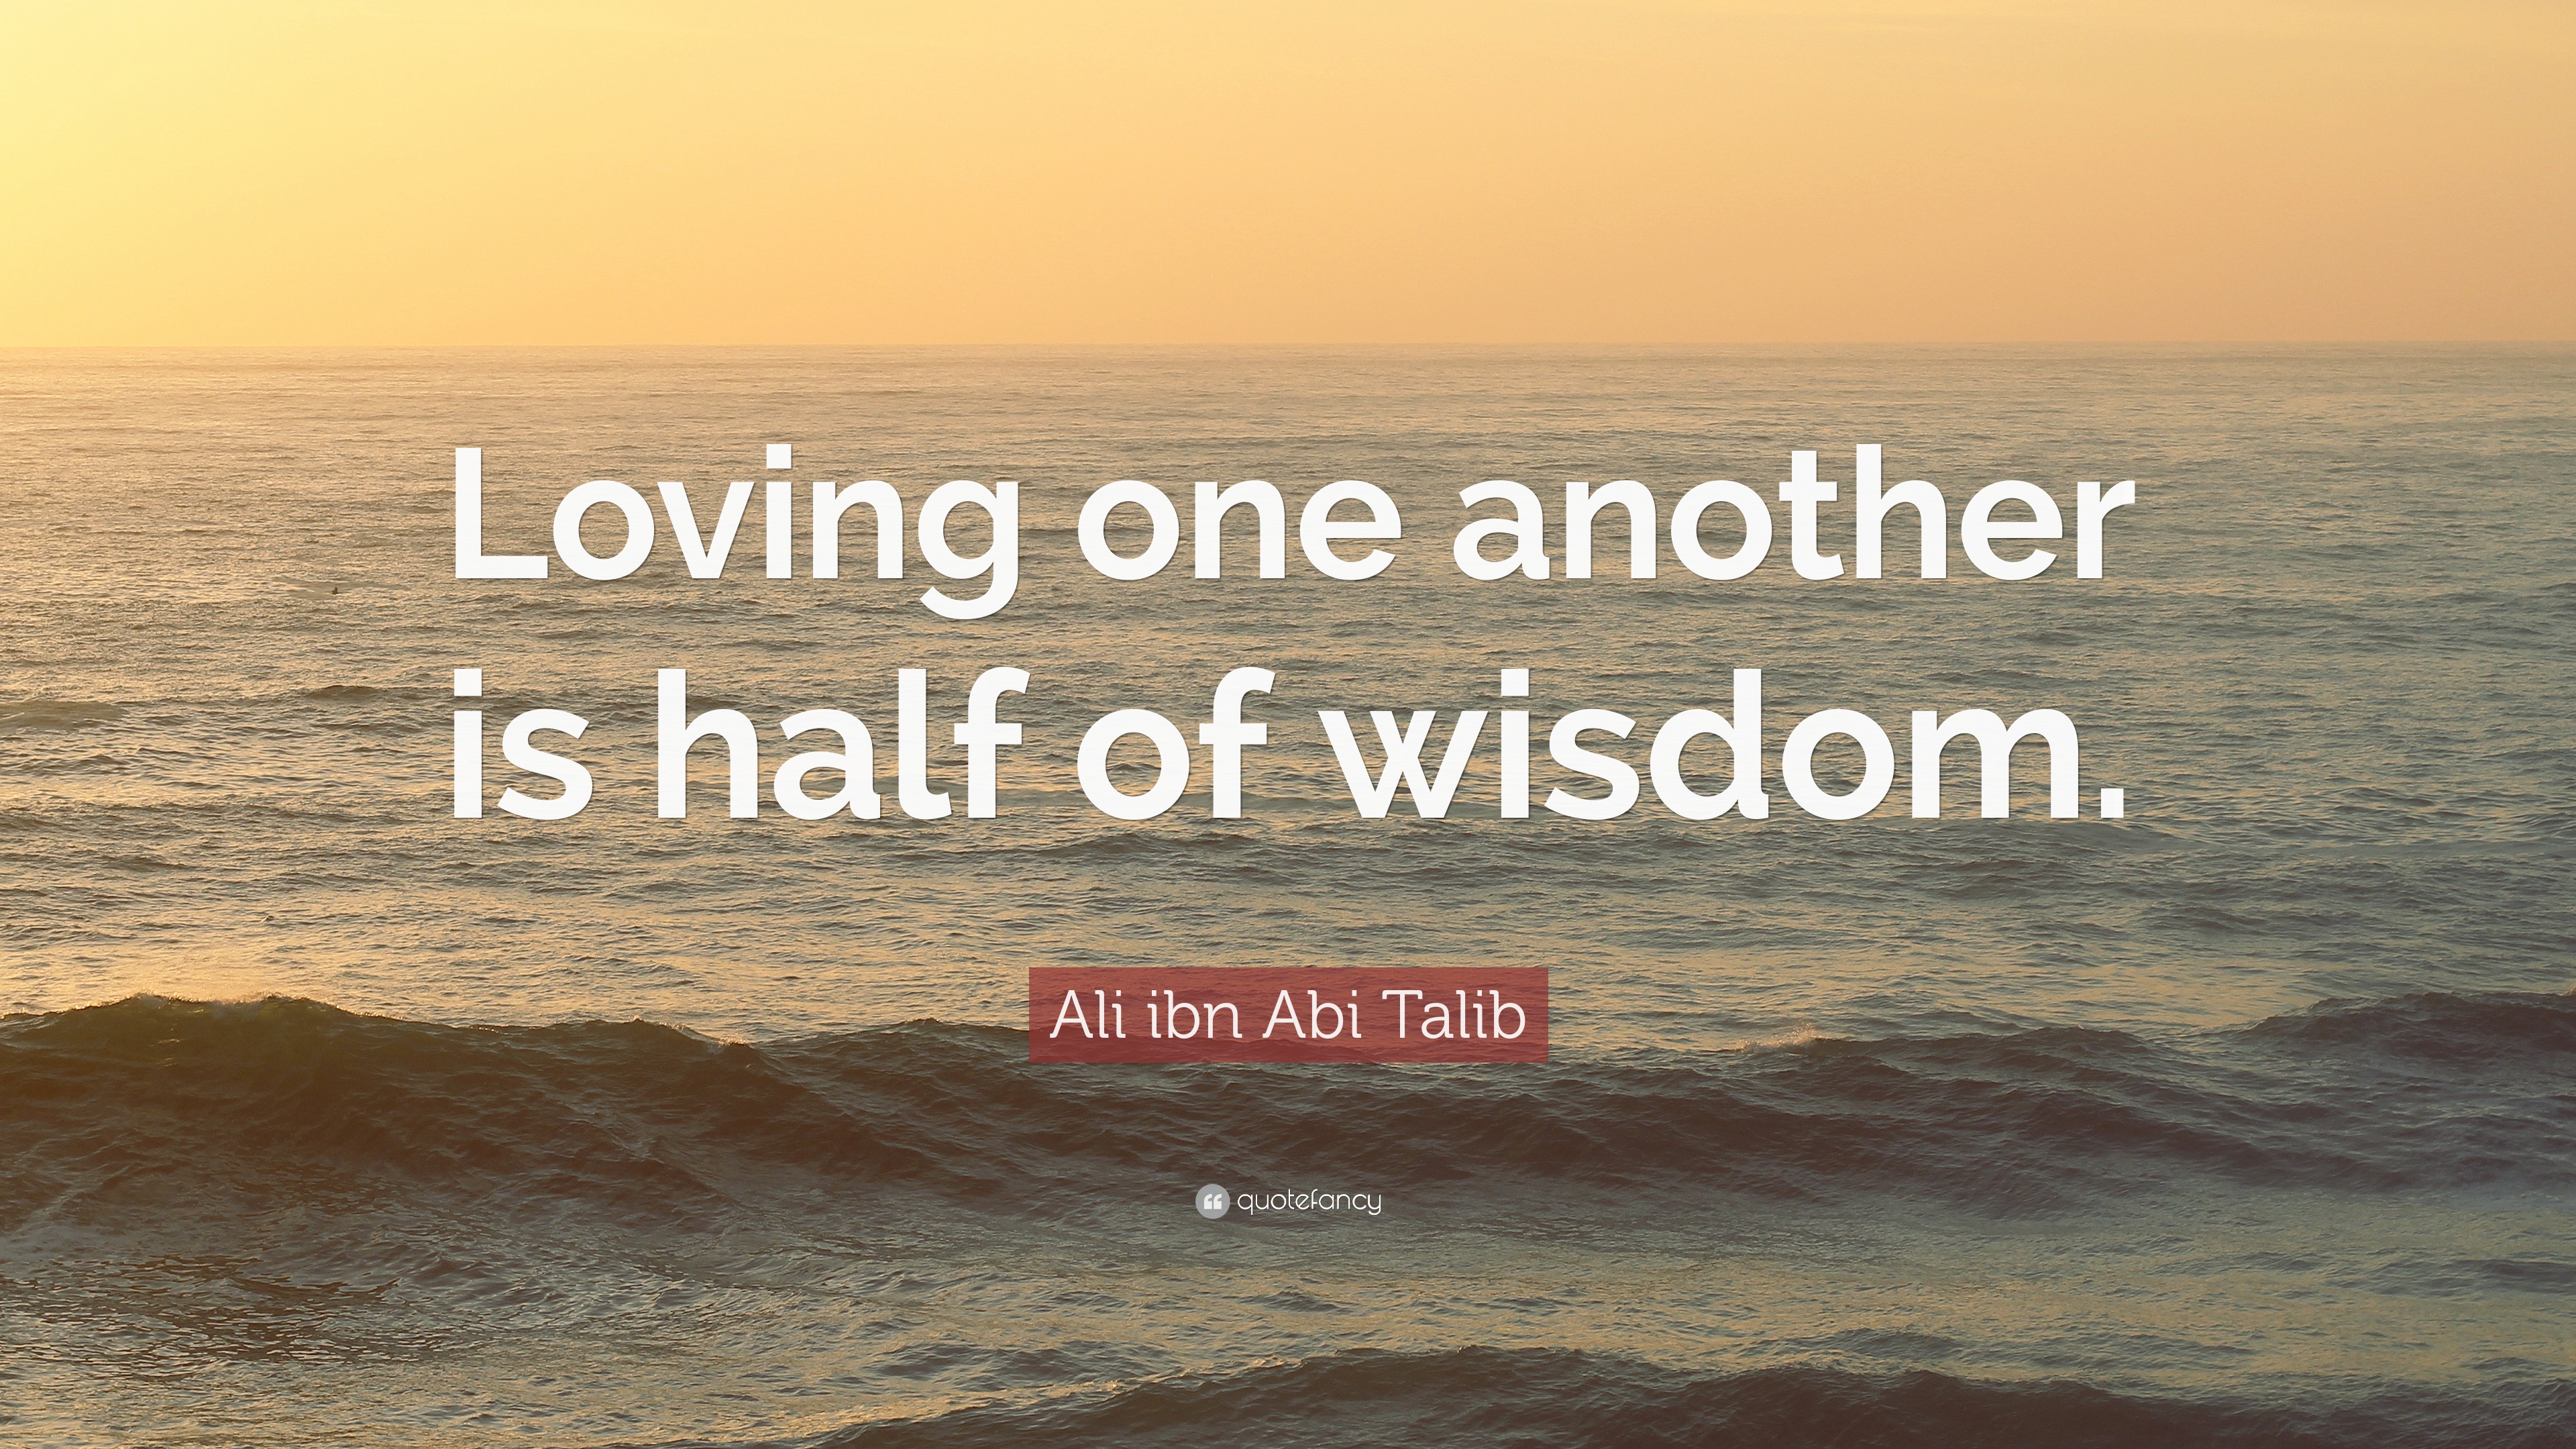 Ali ibn Abi Talib Quote “Loving one another is half of wisdom ”